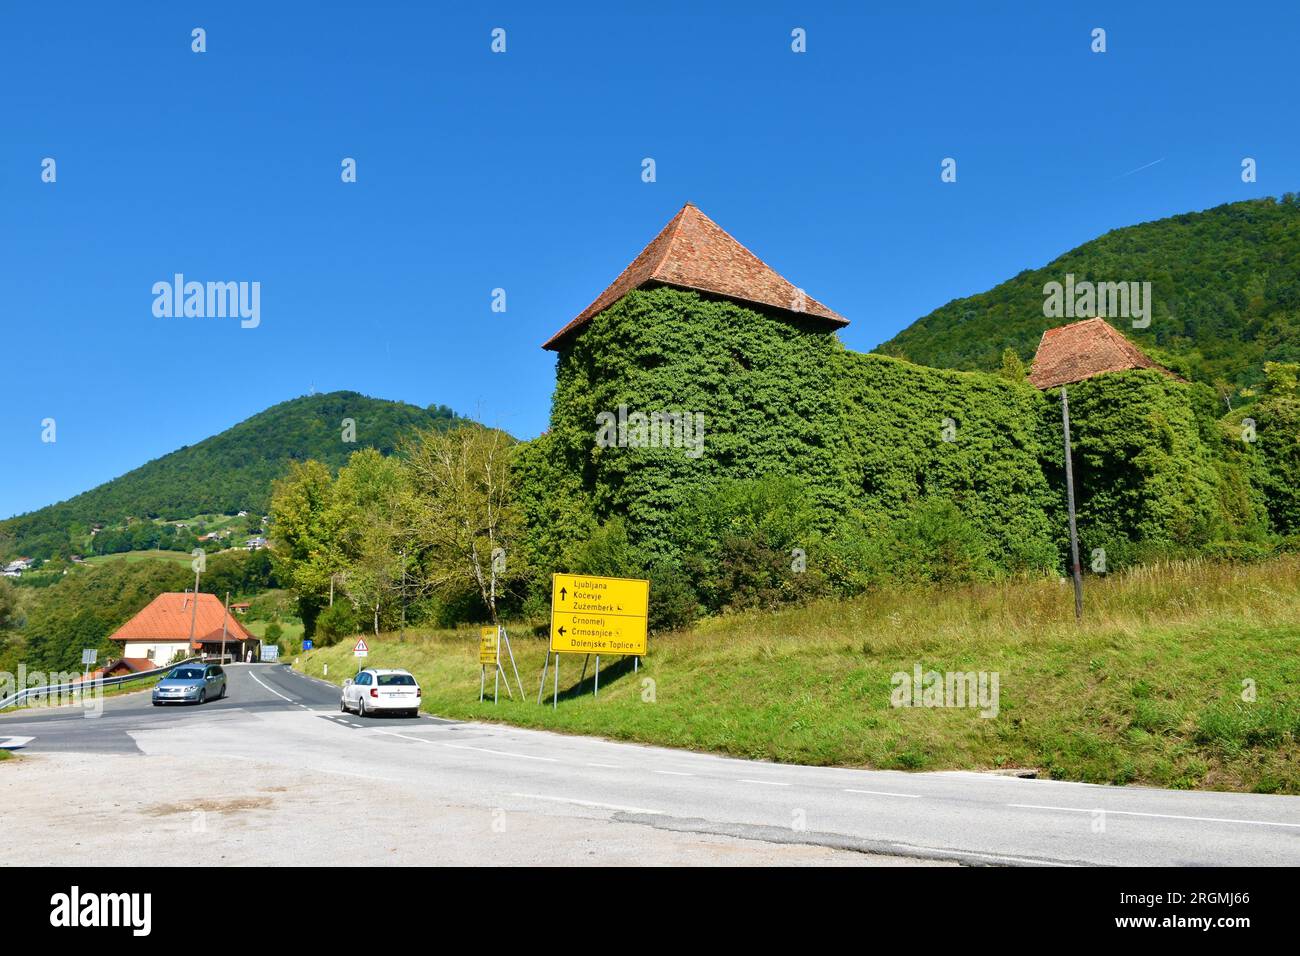 Ruins of Soteska castle covered in vines in Dolenjska, Slovenia next to a road Stock Photo